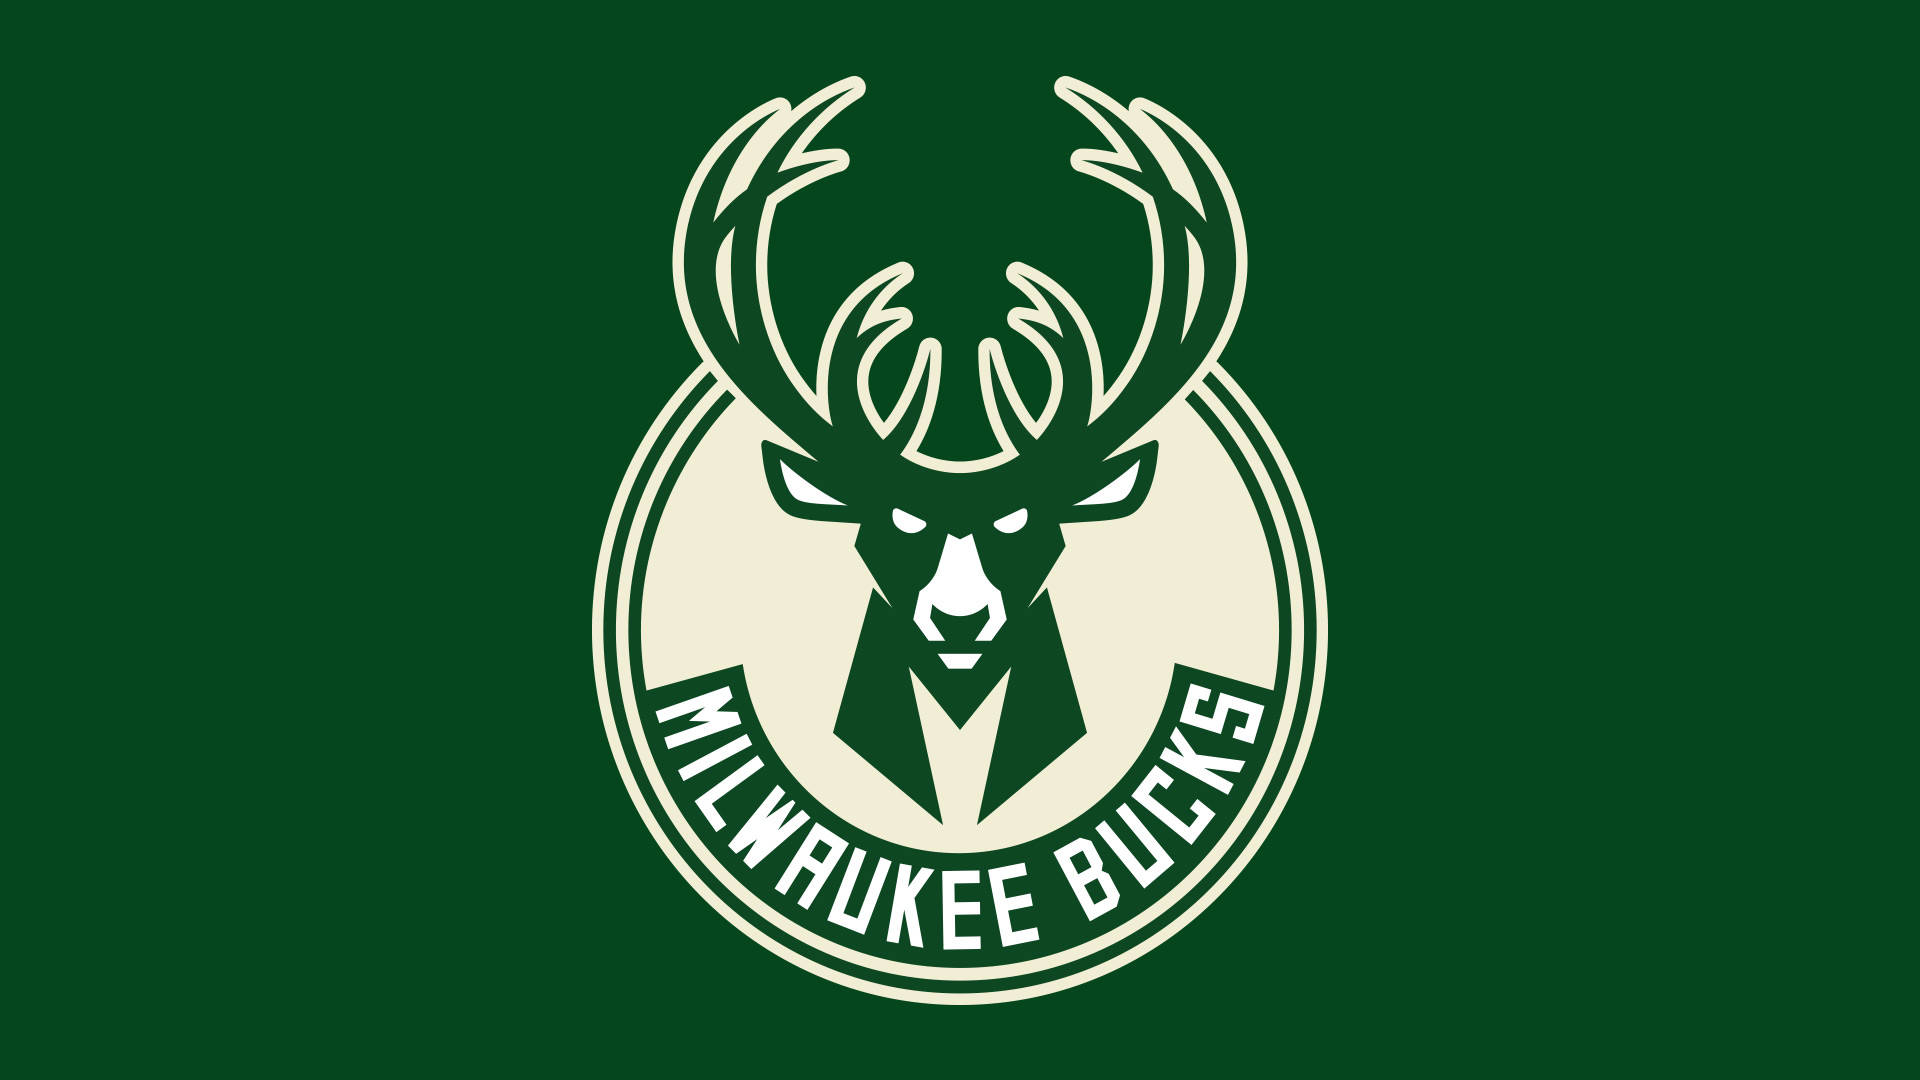 Milwaukee Bucks Basketball Team Background